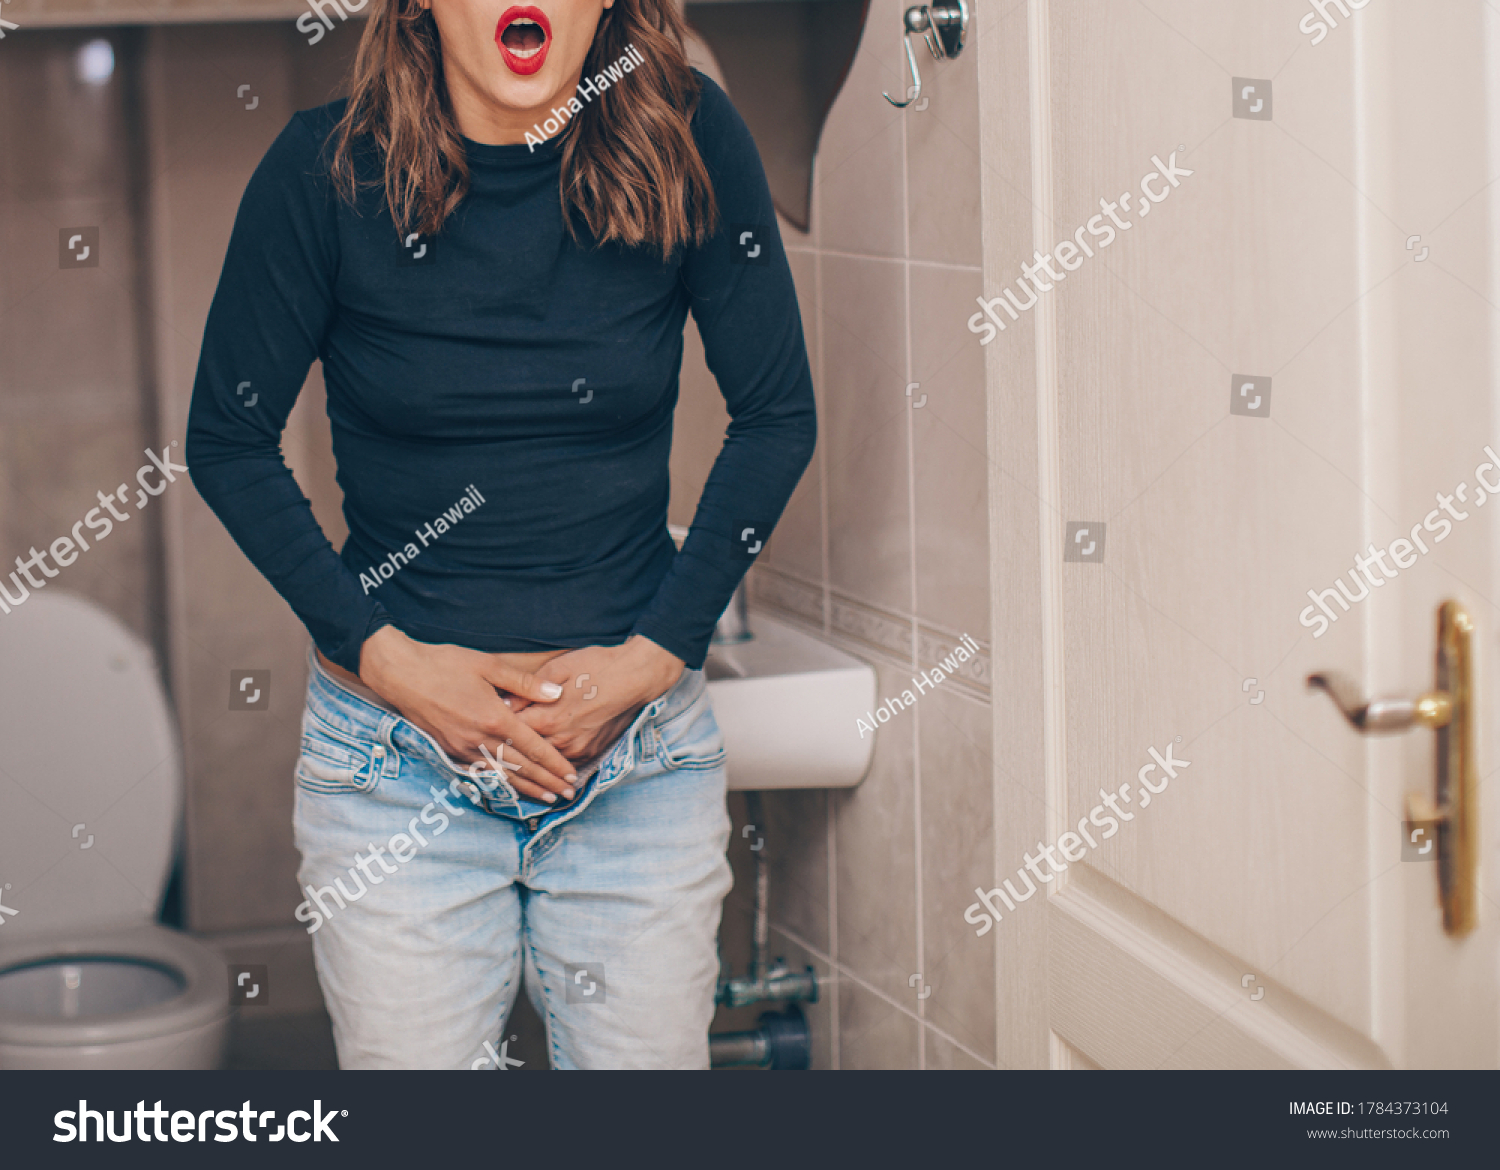 Diarrhea Woman Images Stock Photos Vectors Shutterstock